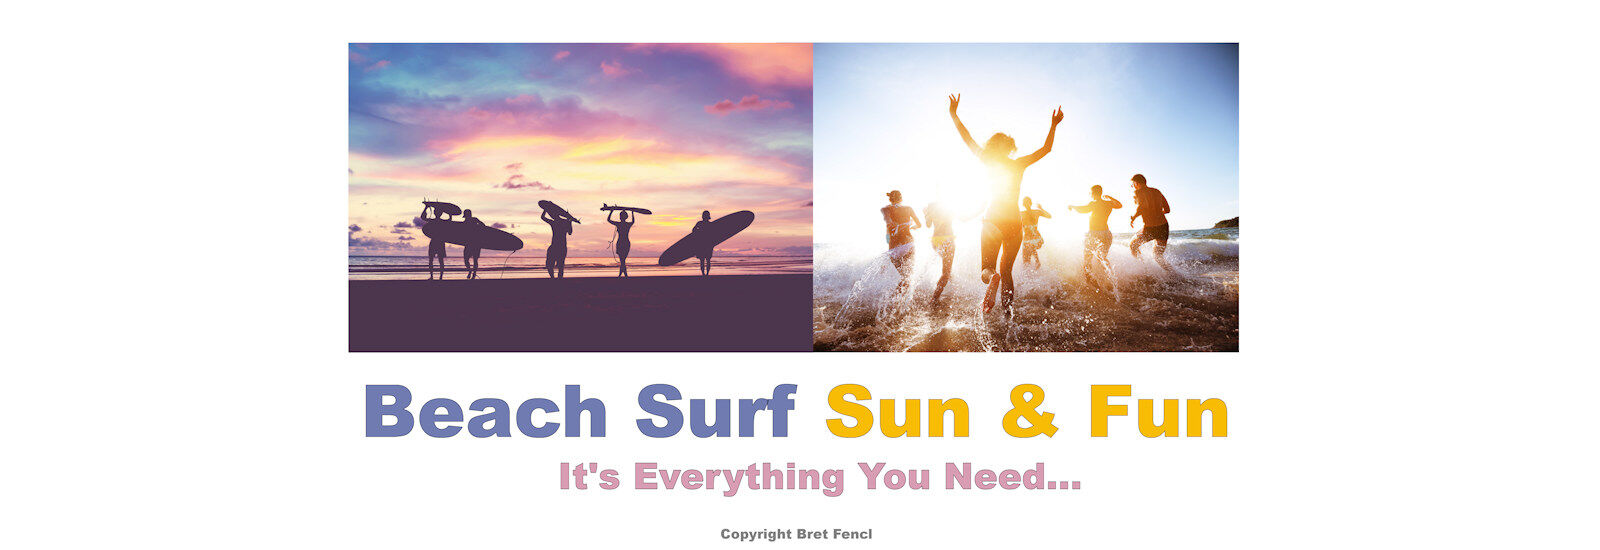 Beach, Surf, Sun & Fun, It's Everything You Need...